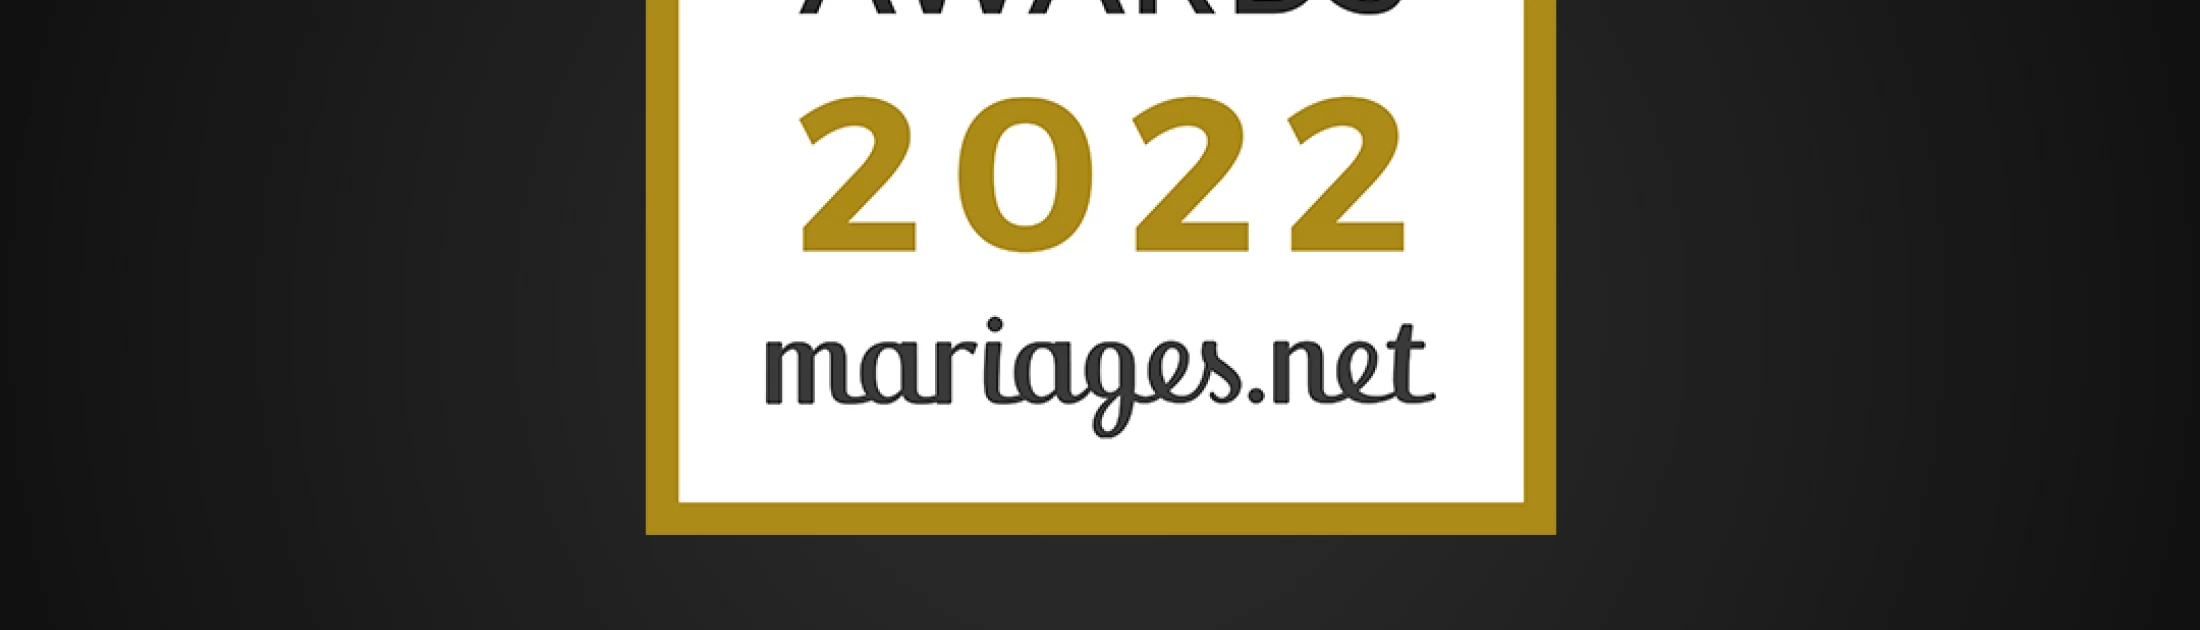 wedding Awards 2022 Mariage.net